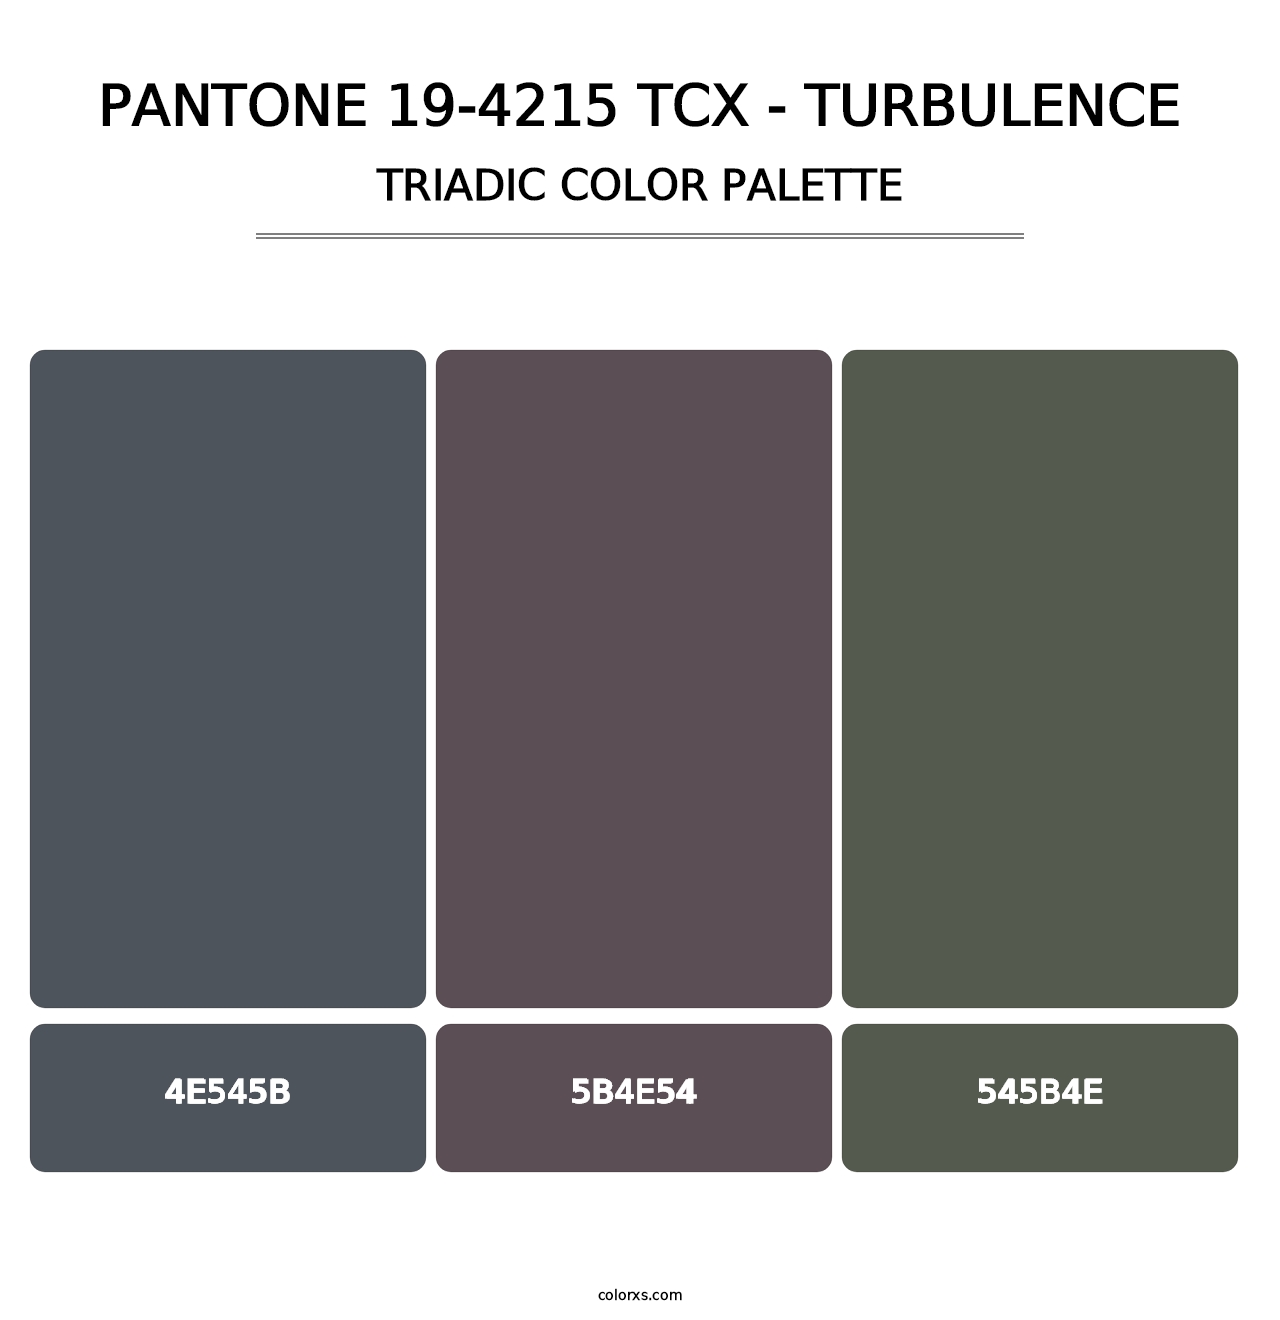 PANTONE 19-4215 TCX - Turbulence - Triadic Color Palette